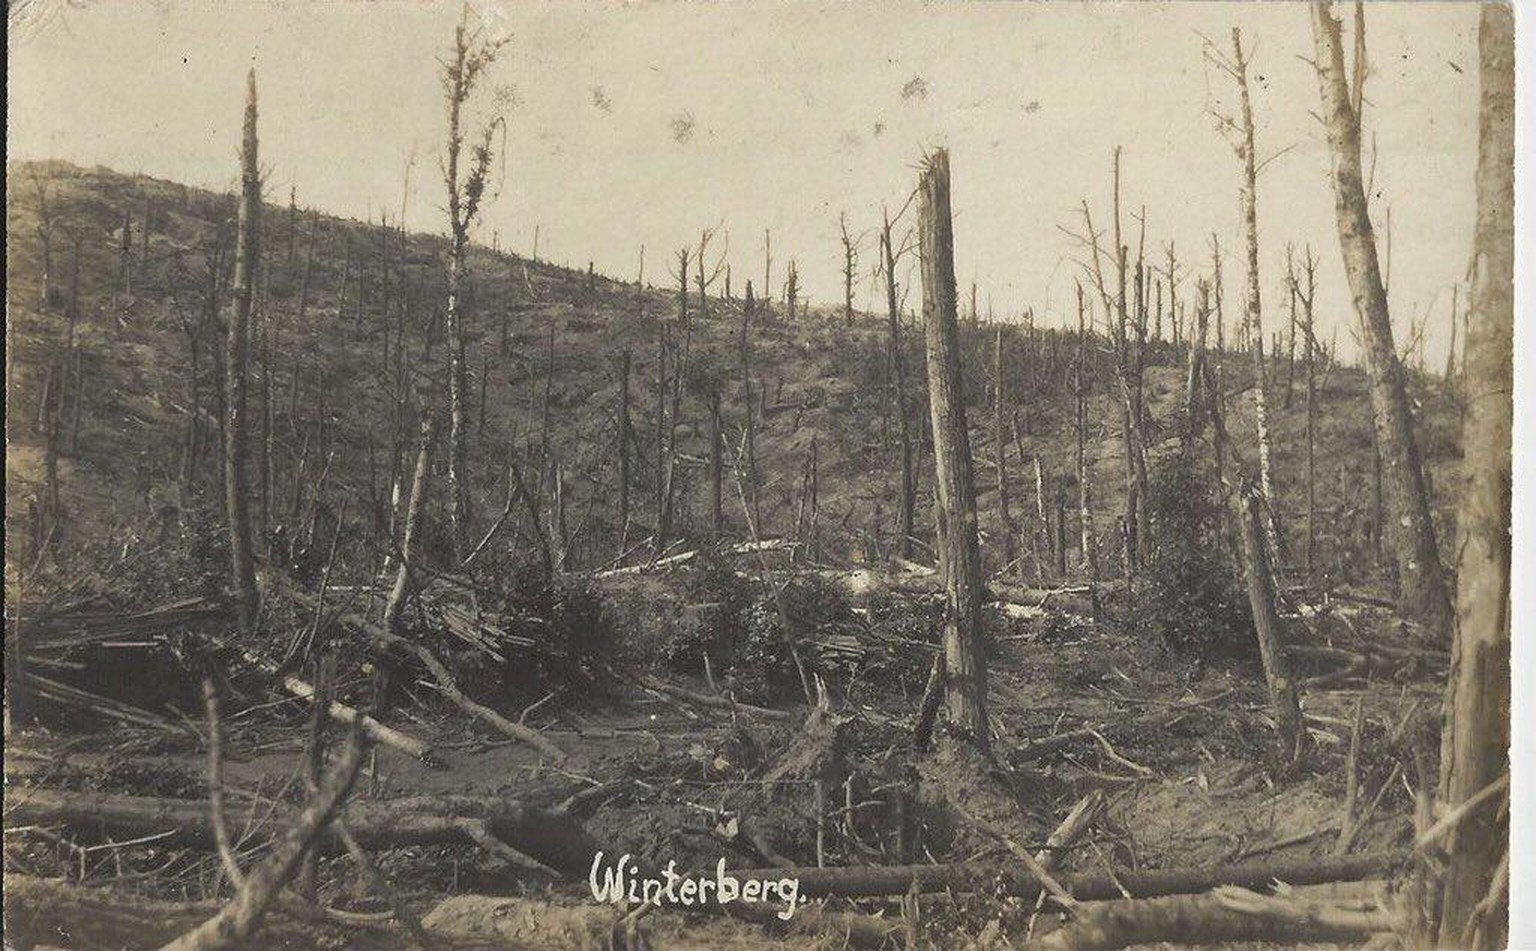 Winterberg, Chemin des Dames, Erster Weltkrieg